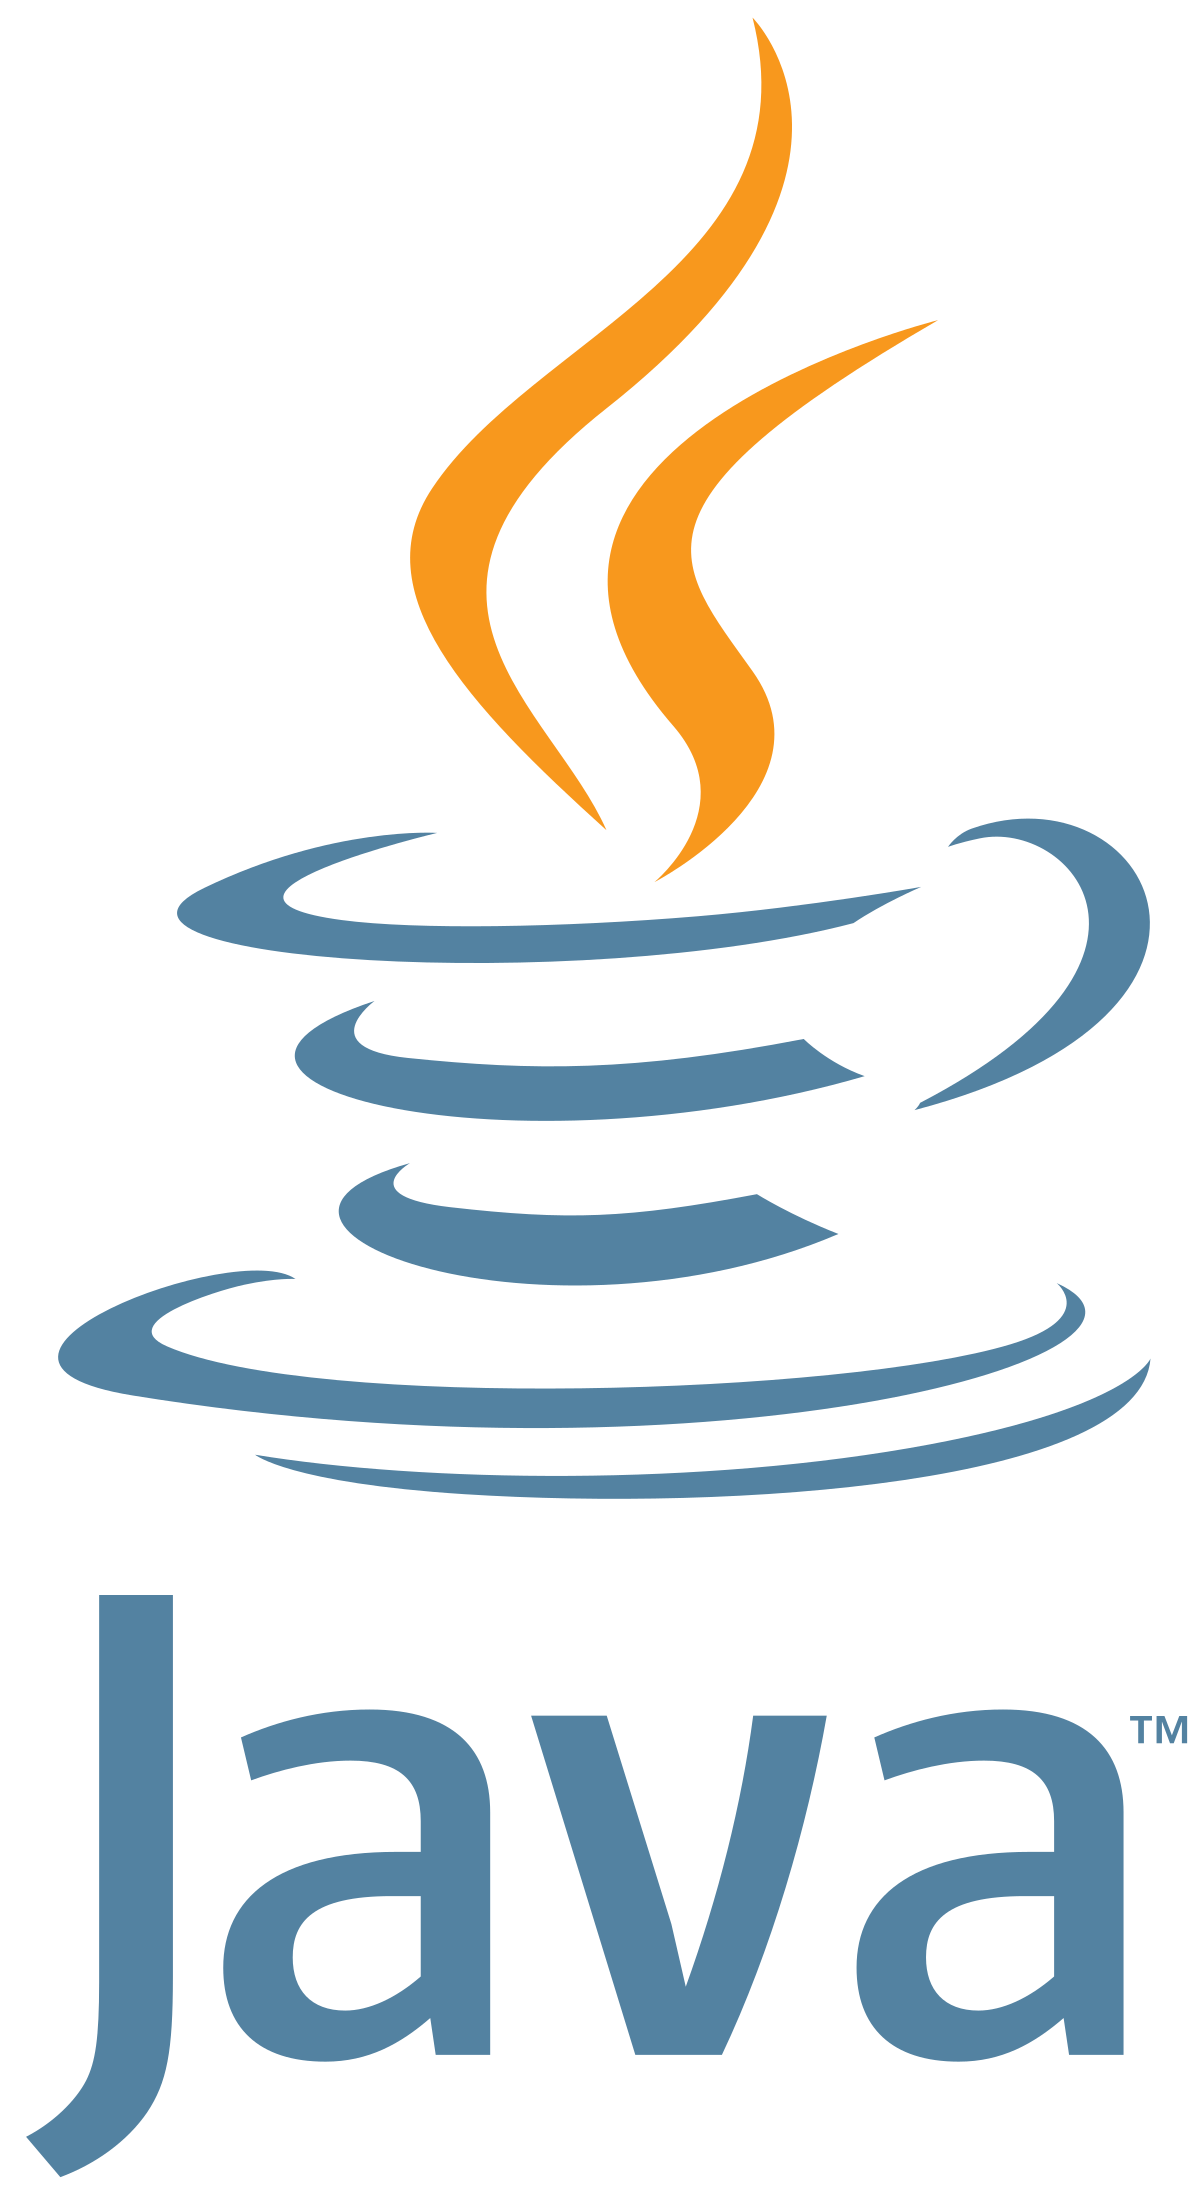 Red Abstract Windows 1.0 Logo - Java (programming language)